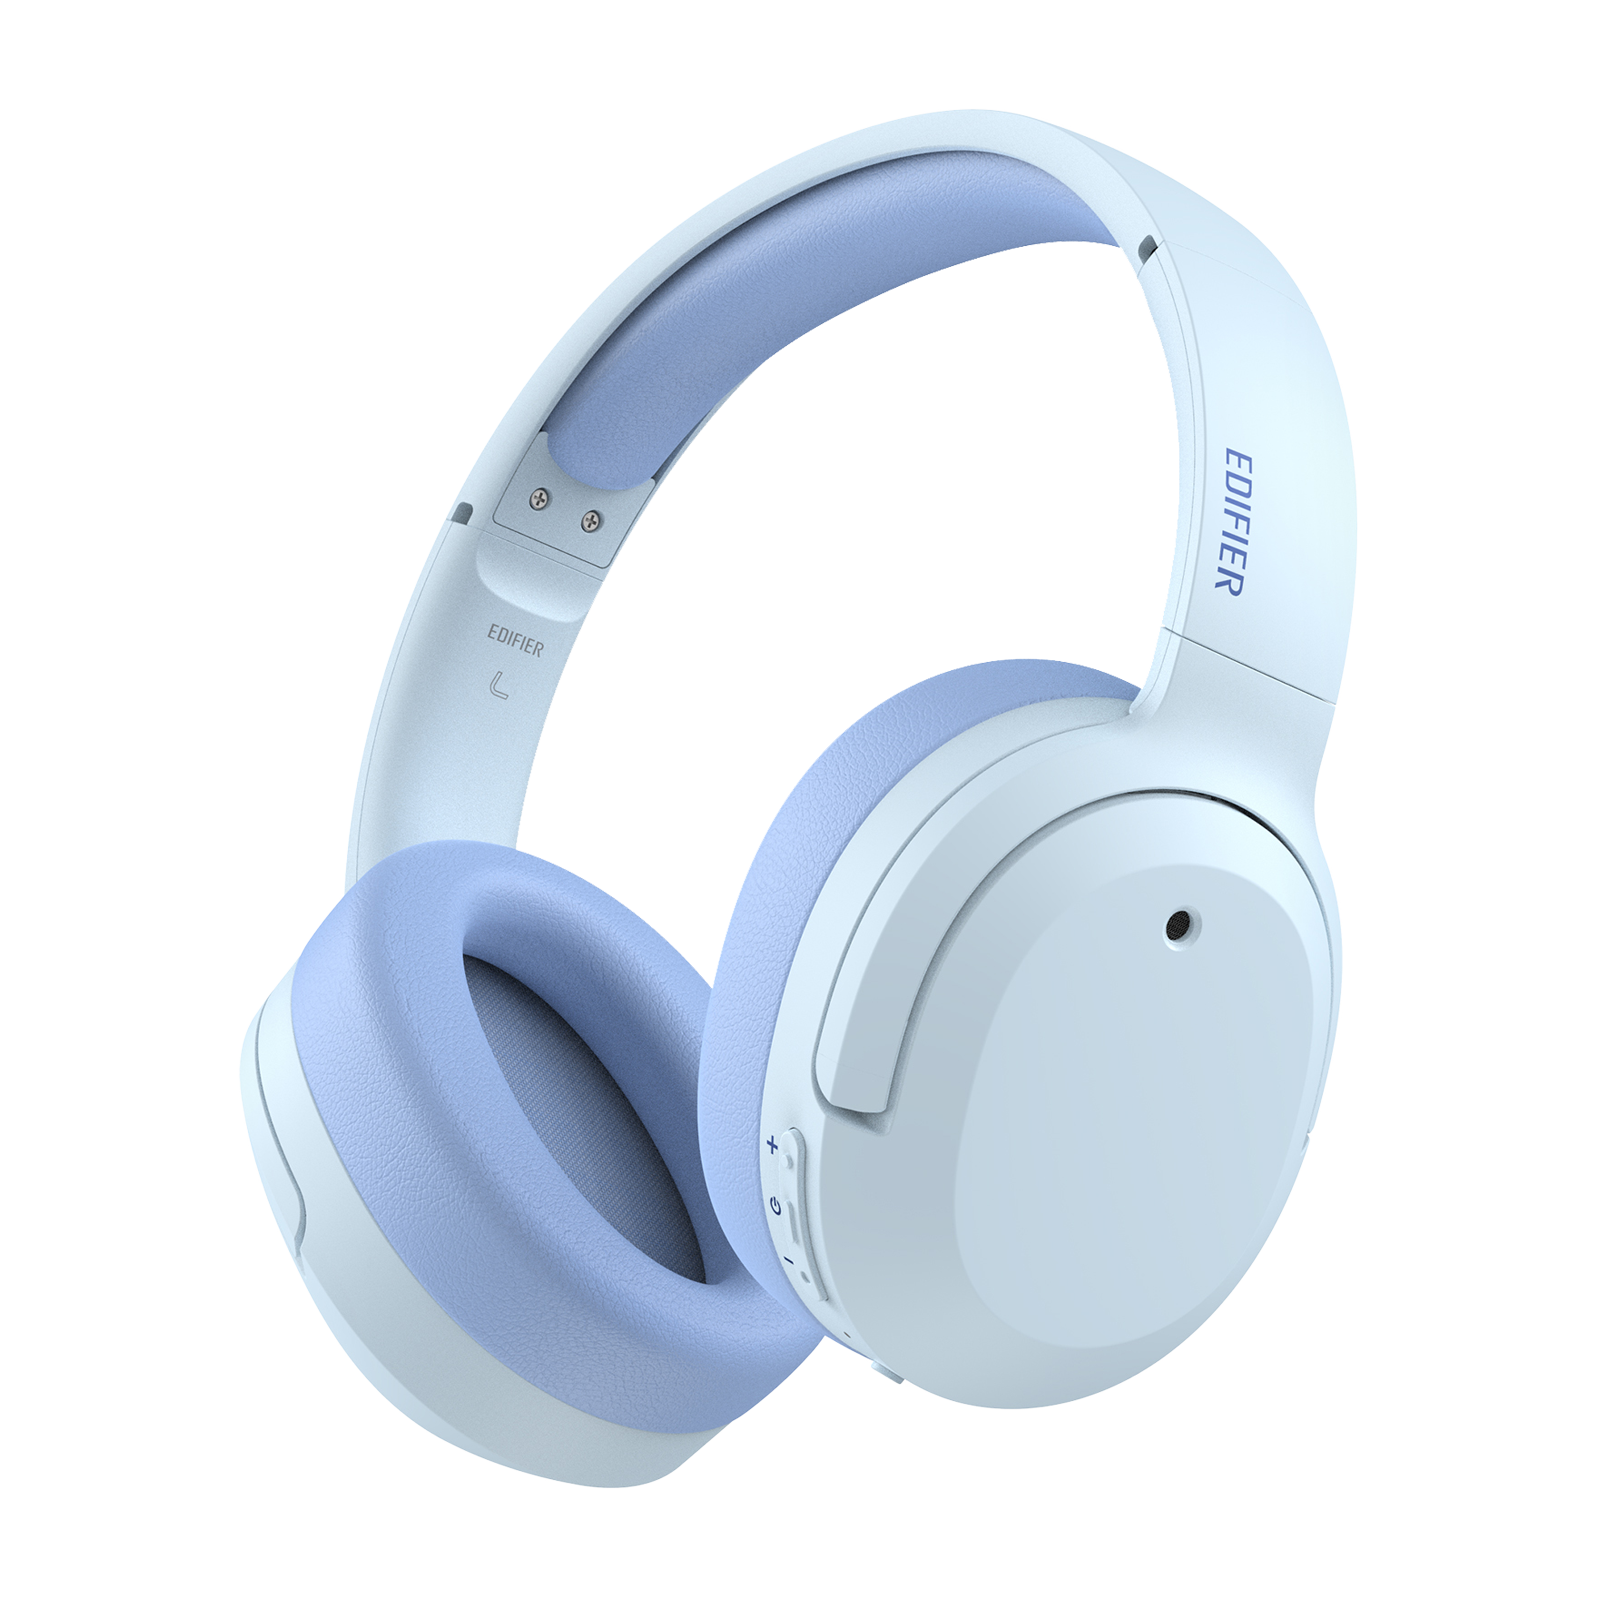 W820NB Plus Hi-Res Audio Headphones ANC Bluetooth Stereo Headphones